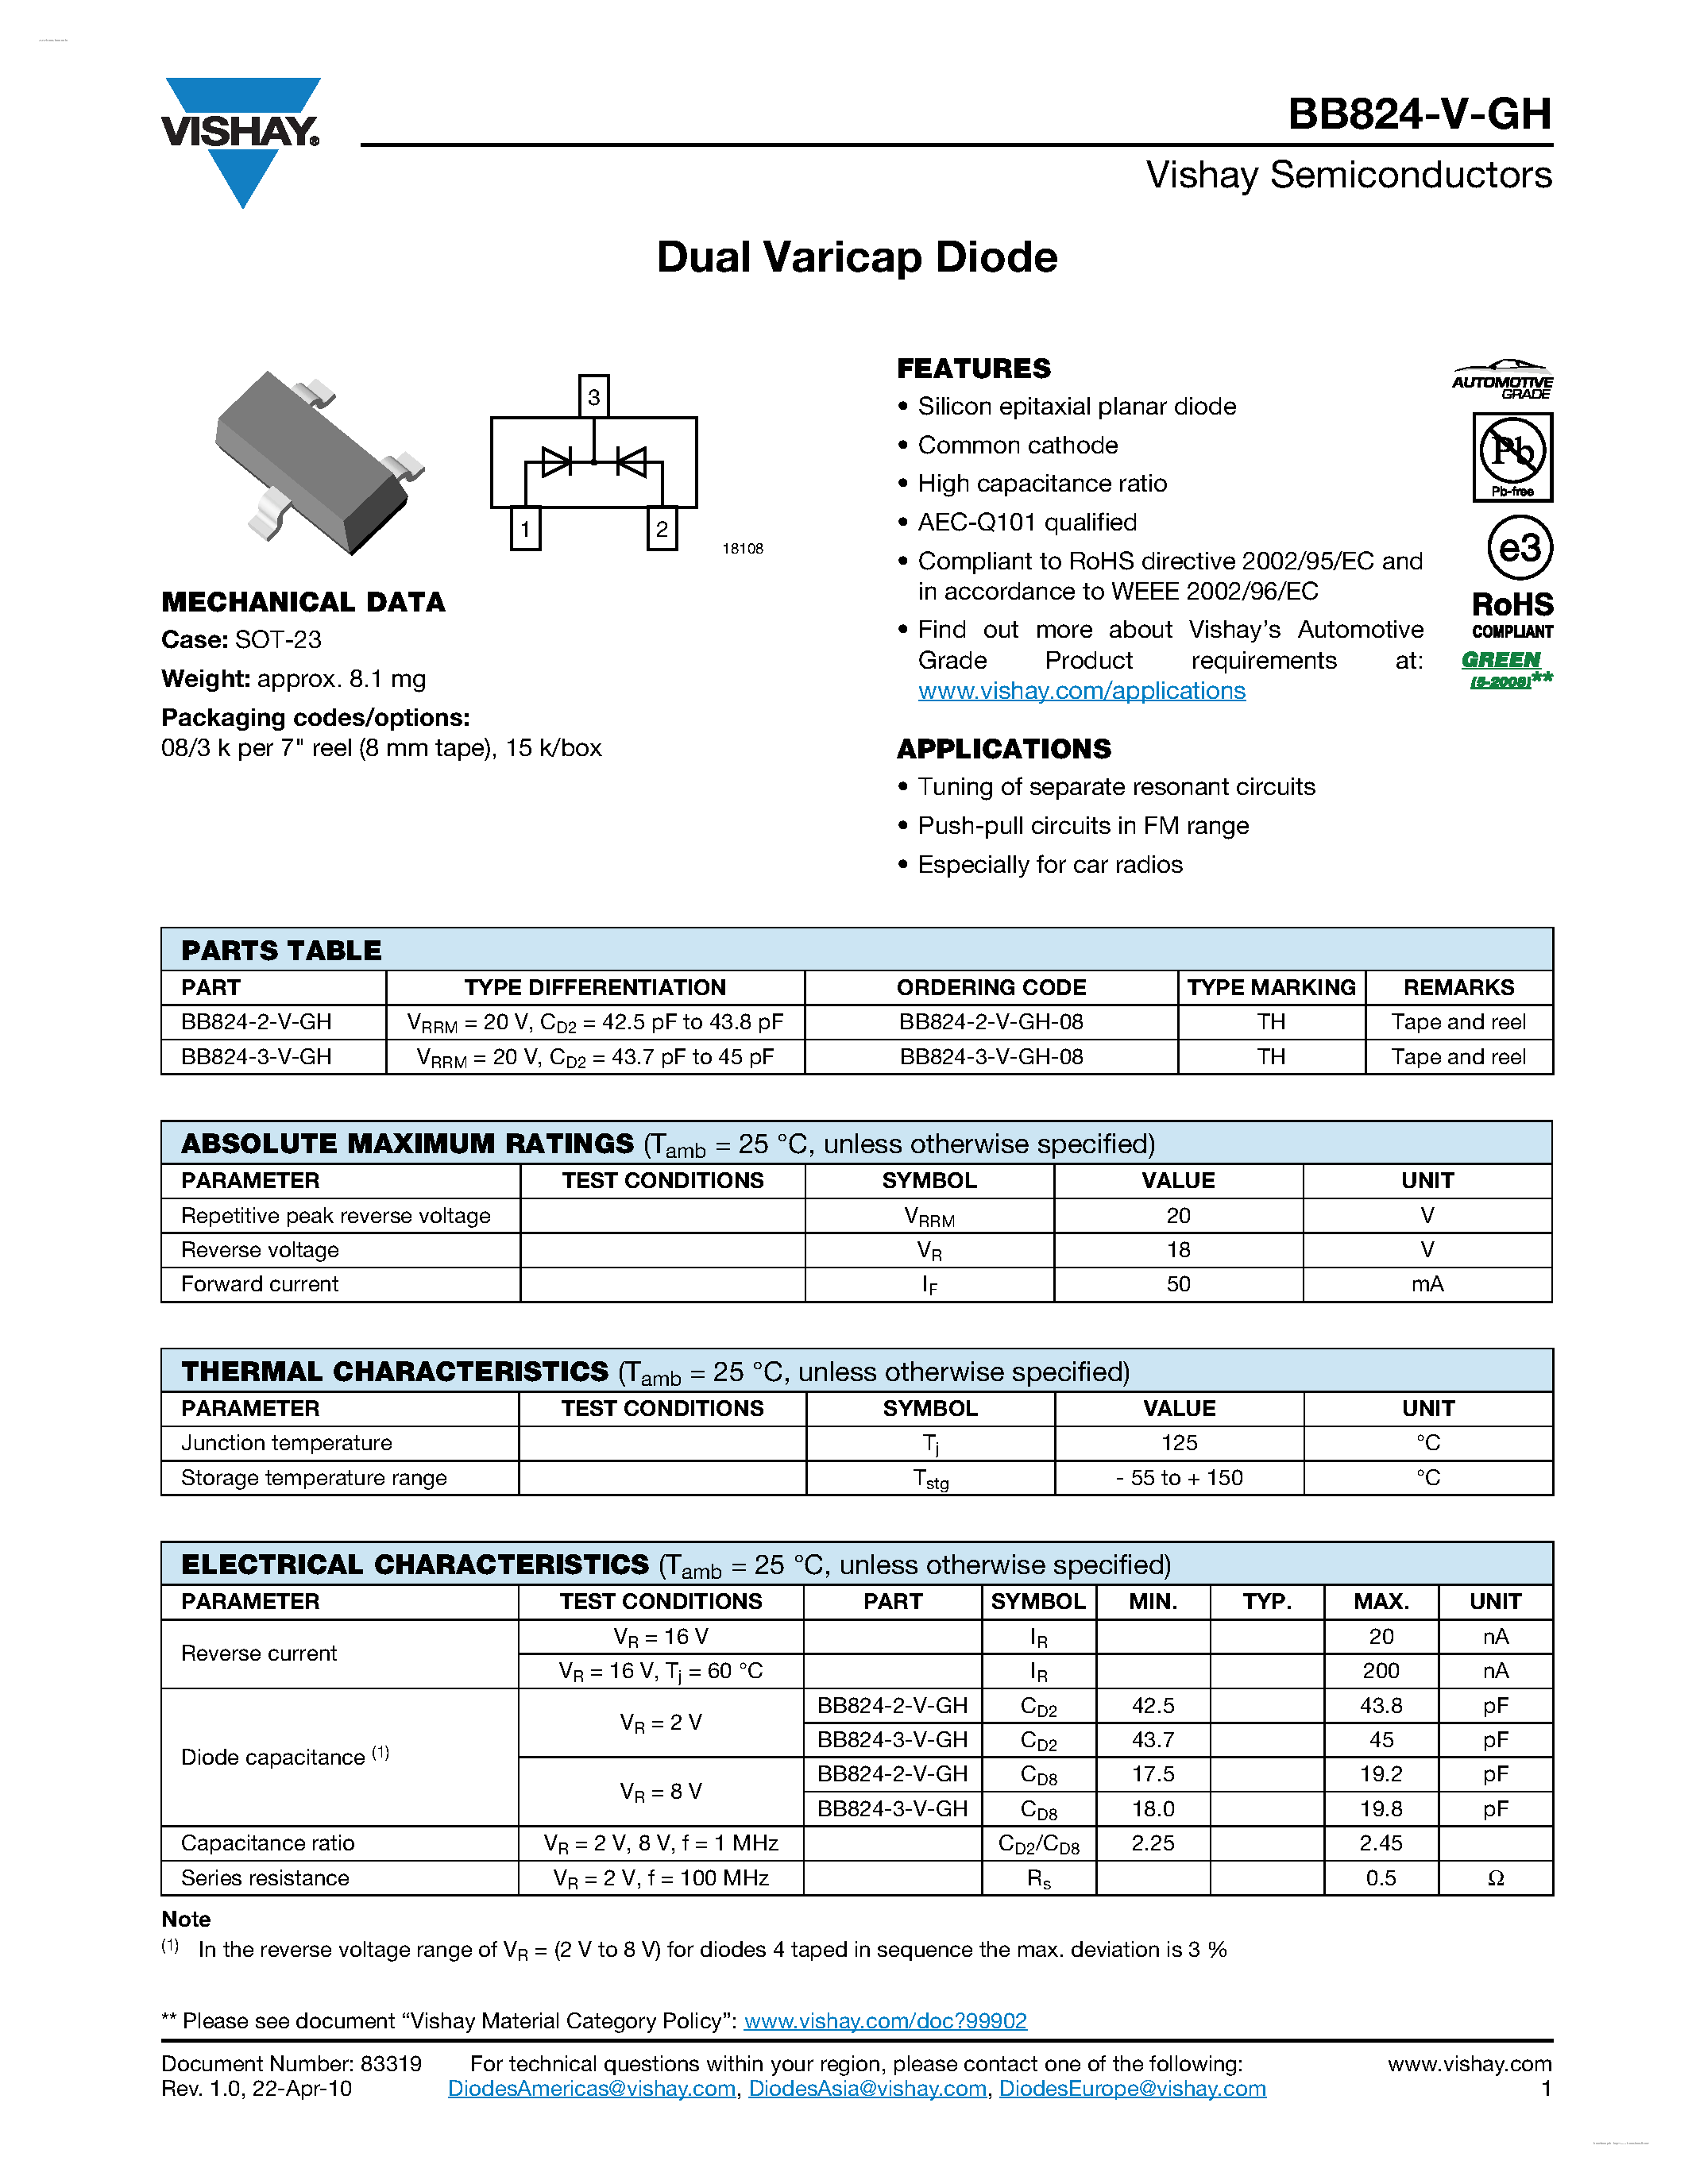 Datasheet BB824-V-GH - Dual Varicap Diode page 1